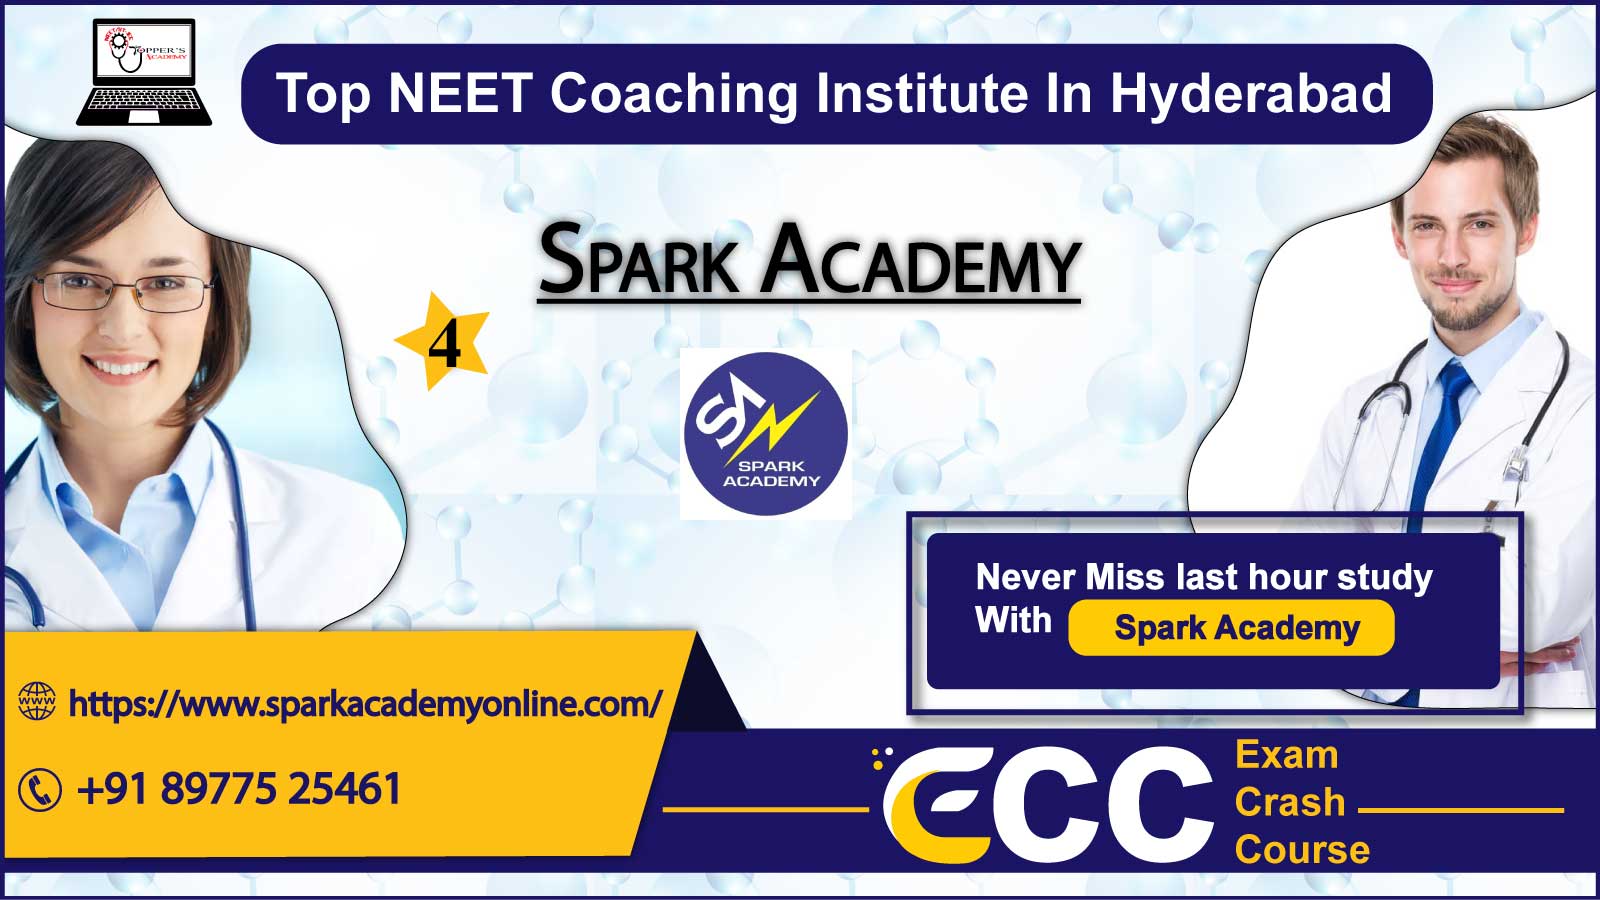 Spark Academy NEET Coaching in Hyderabad